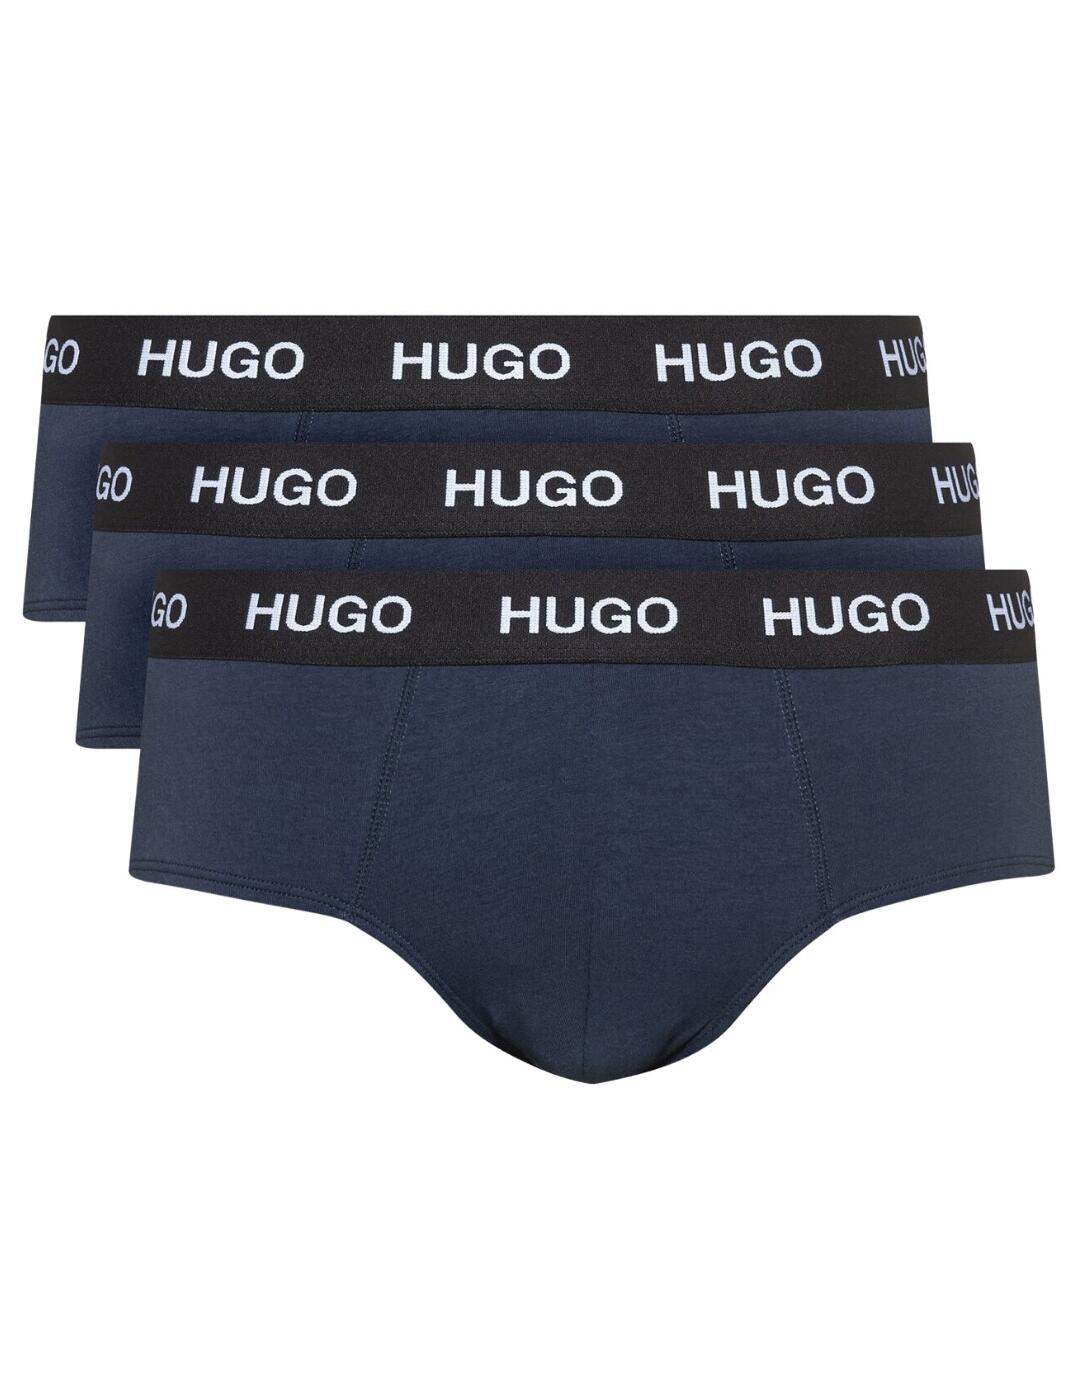 Hugo Boss Low-rise Briefs 3 Pack Navy